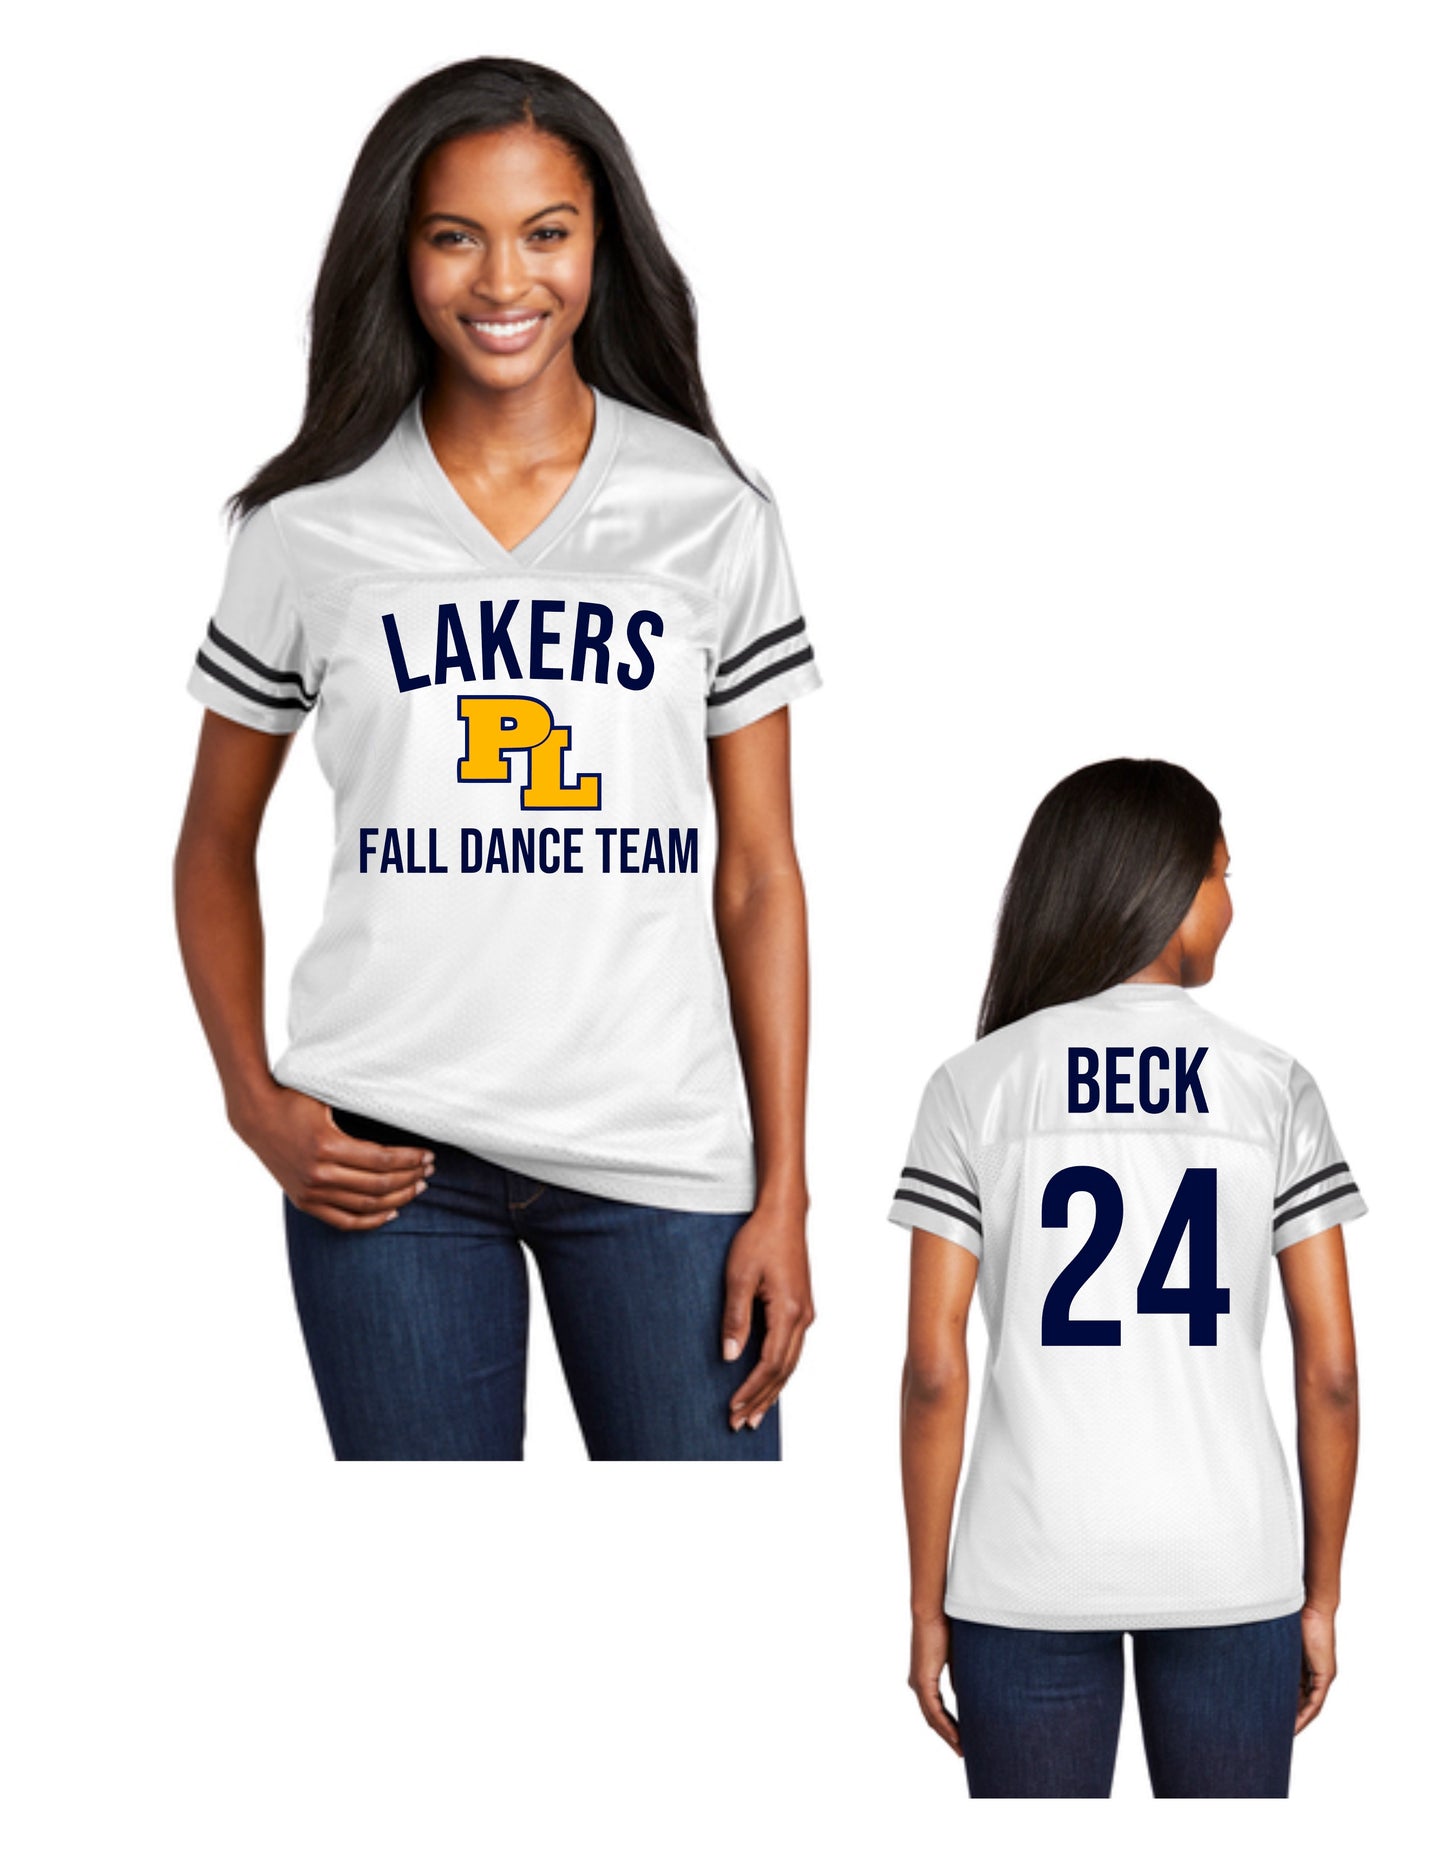 Lakers Fall Dance Team Jerseys